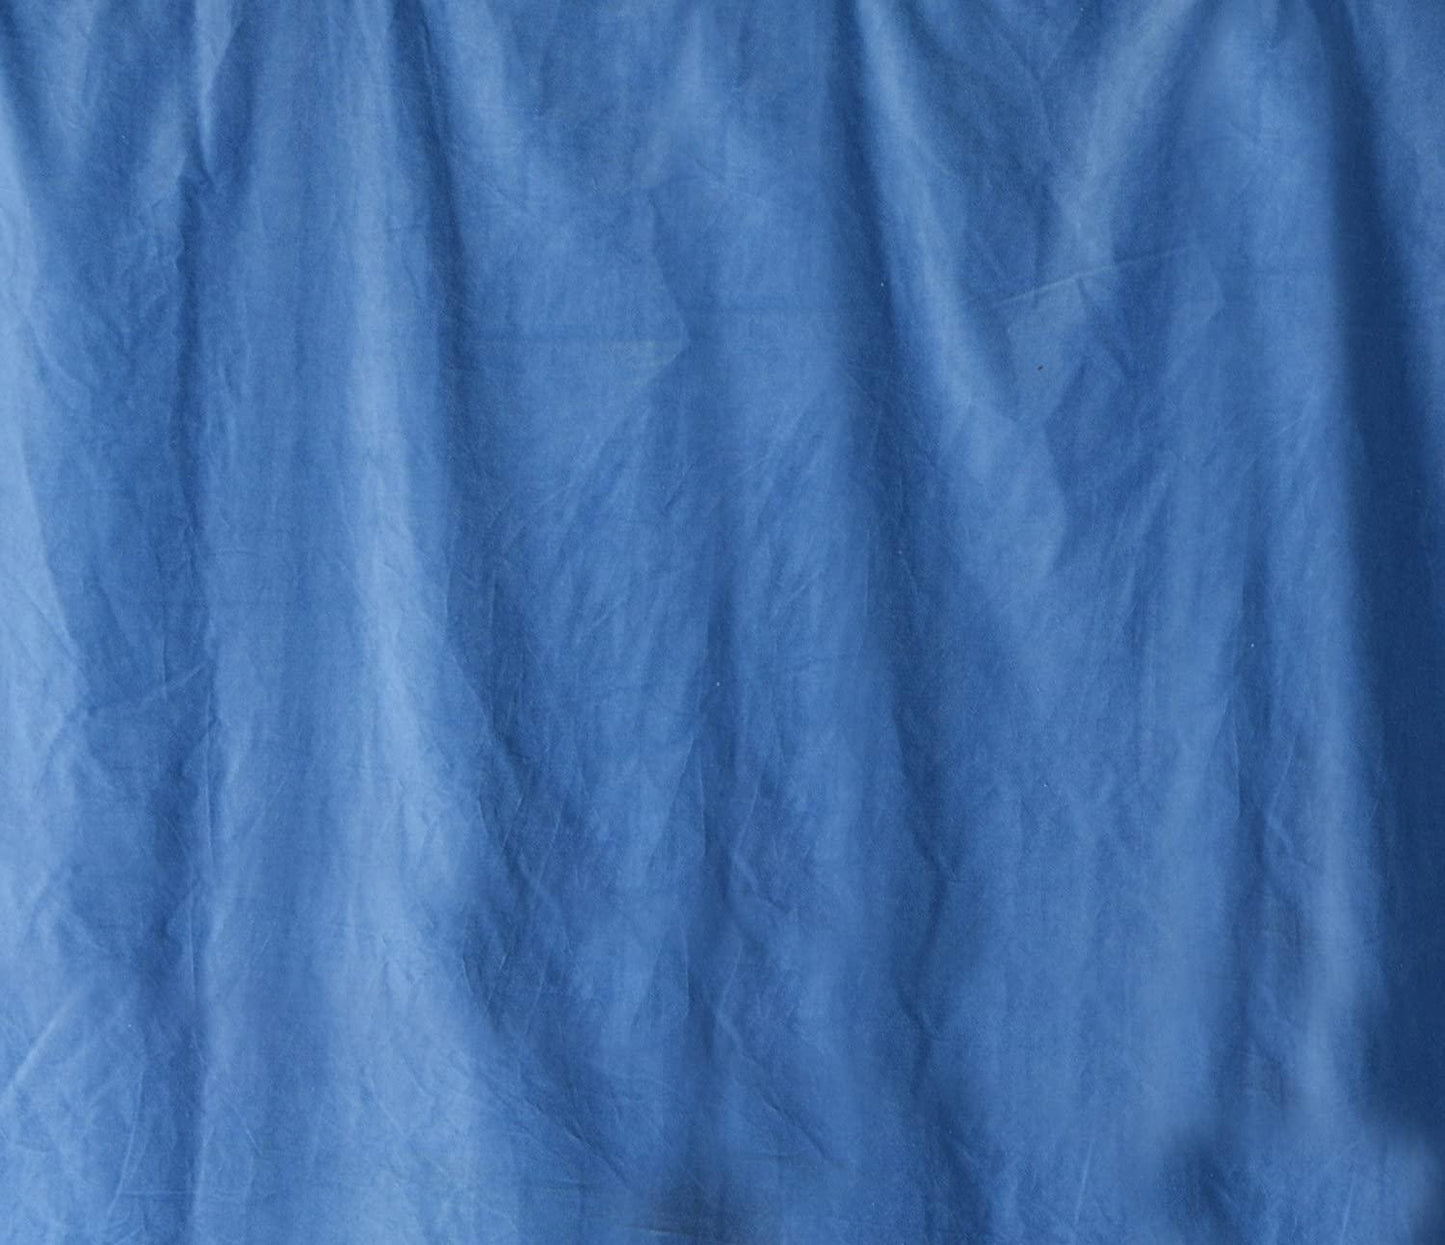 Solid Color 1 Velvet Curtain-Blue - The Teal Thread